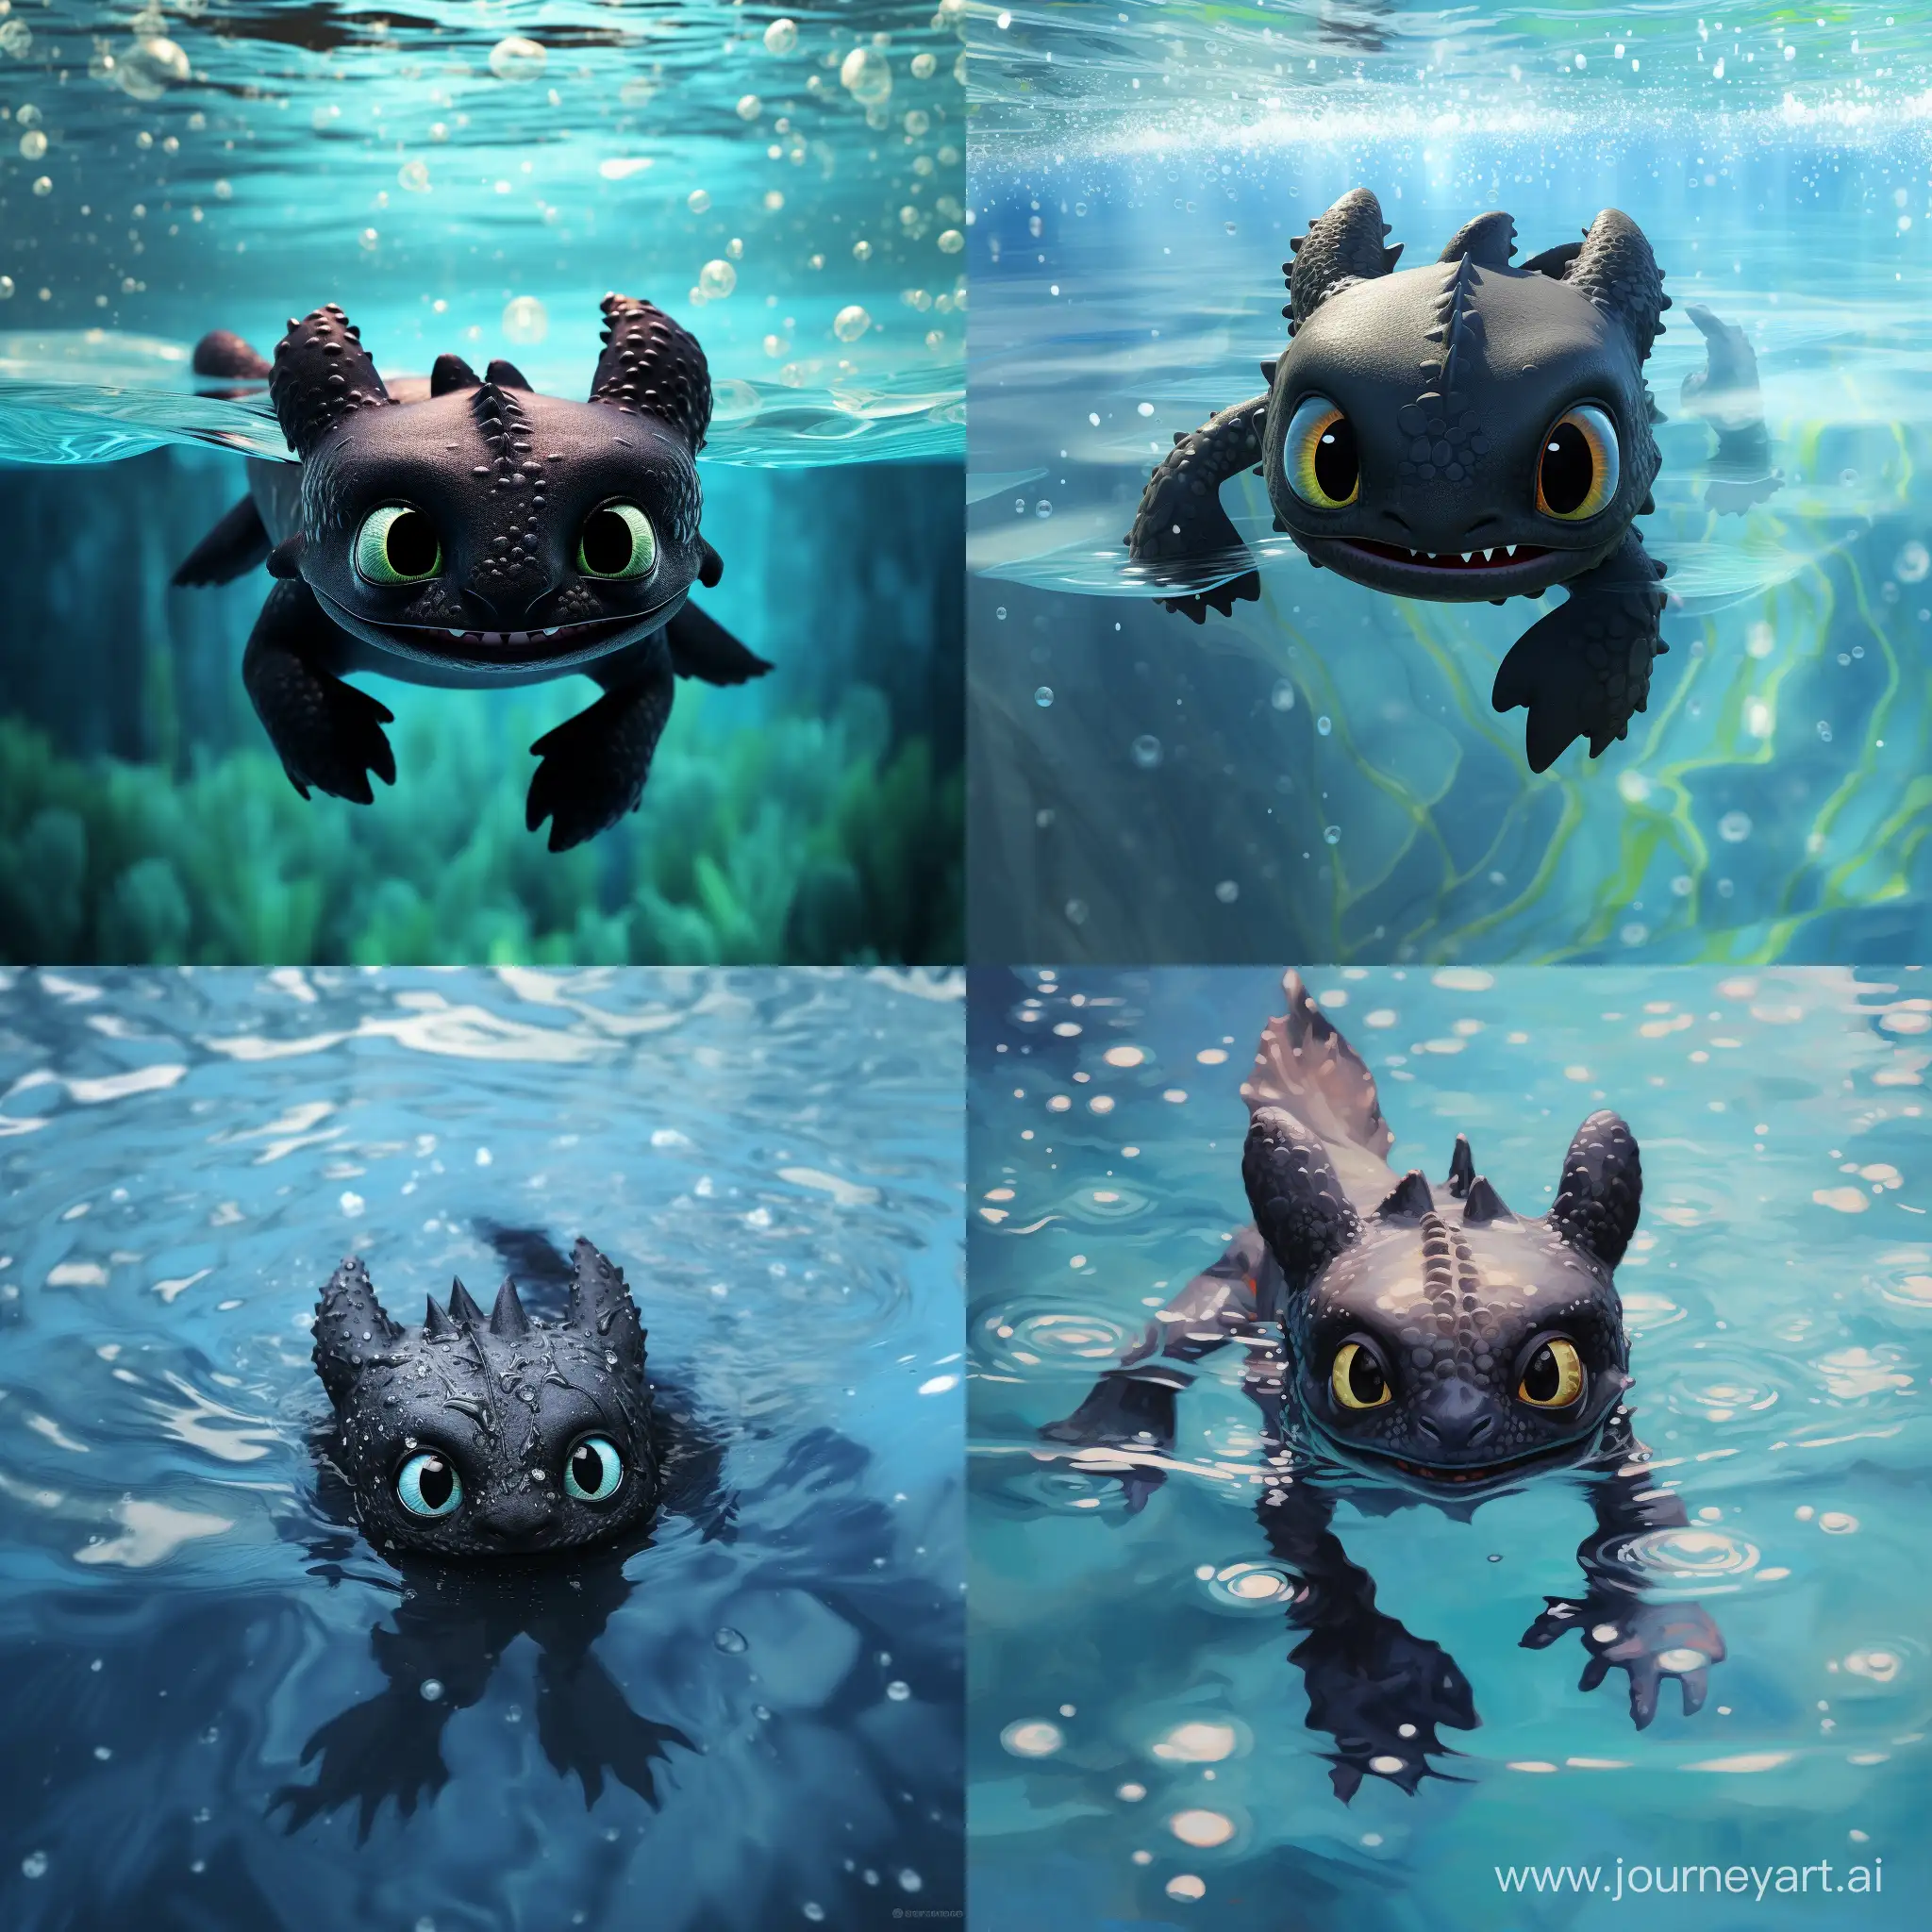 Playful-Toothless-Dragon-Enjoying-a-Refreshing-Swim-in-a-Crystal-Clear-Pool